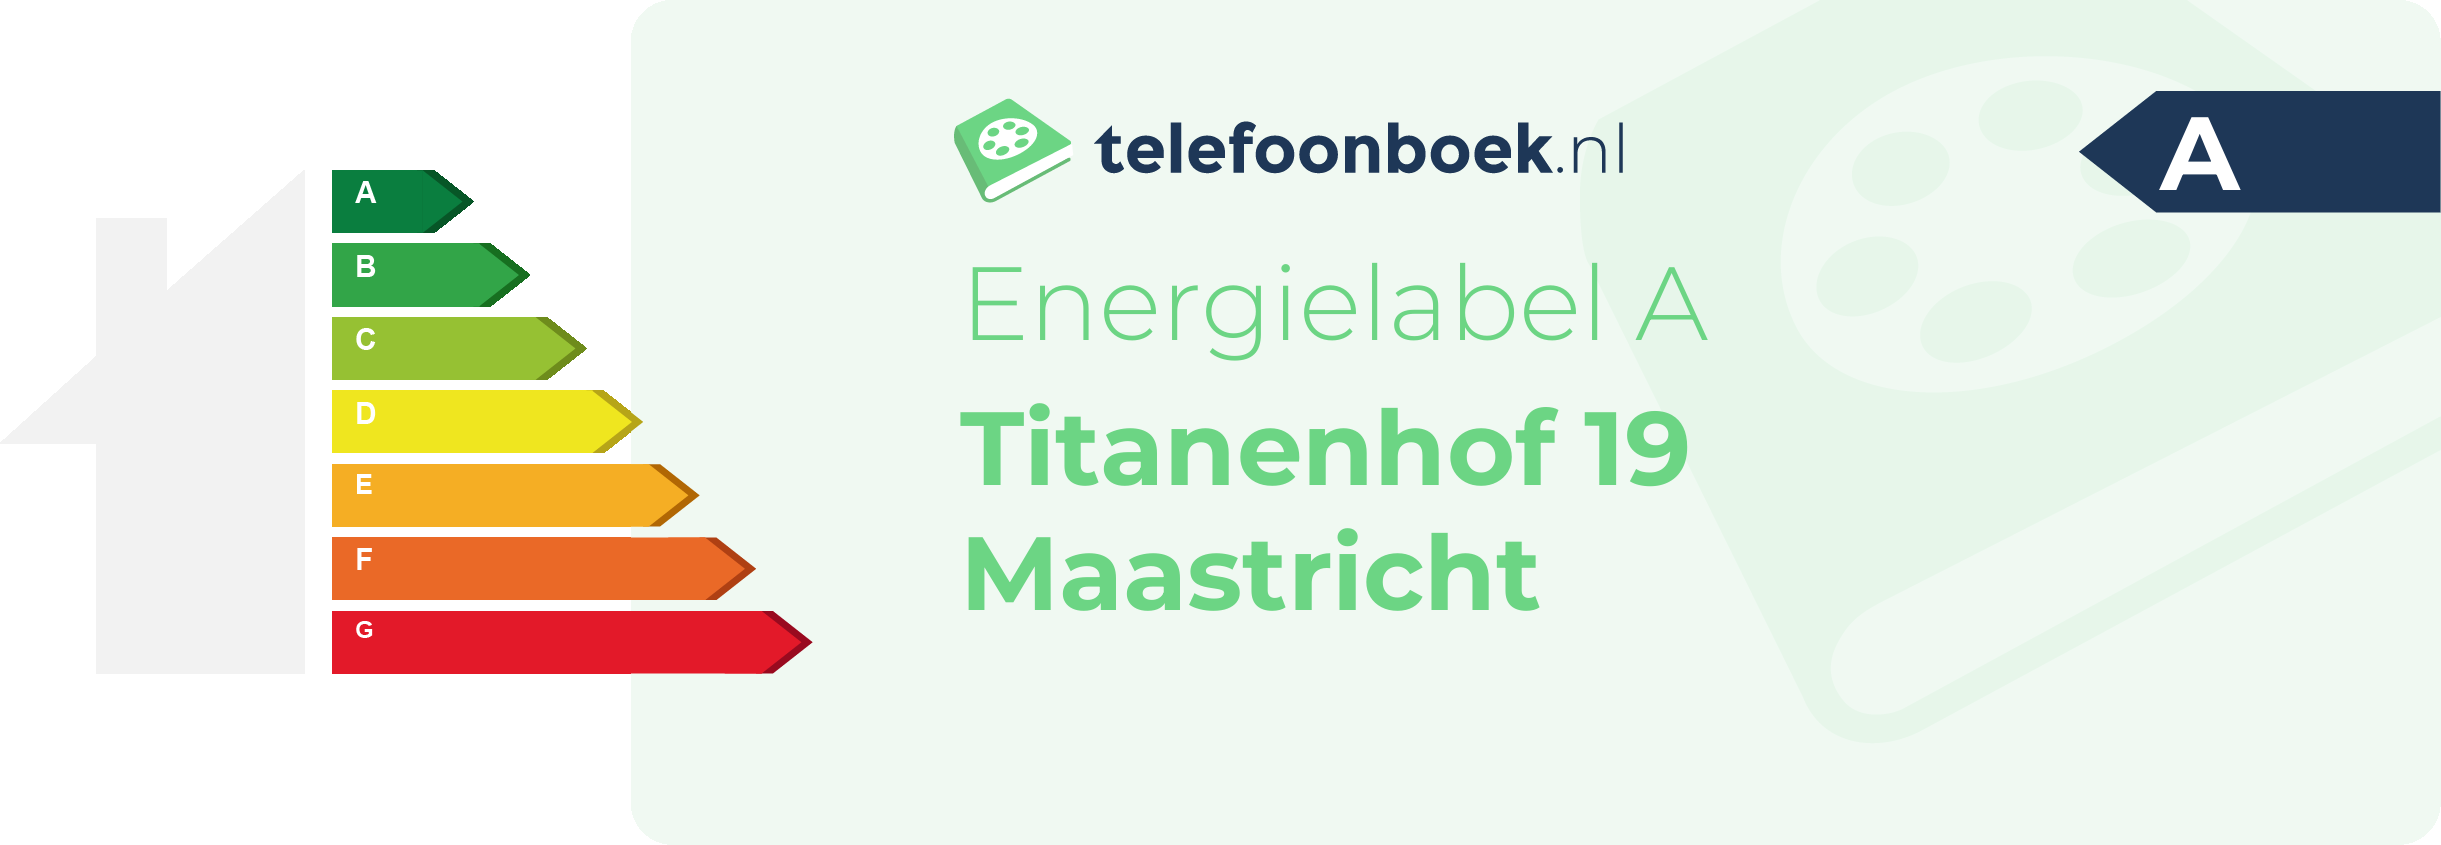 Energielabel Titanenhof 19 Maastricht